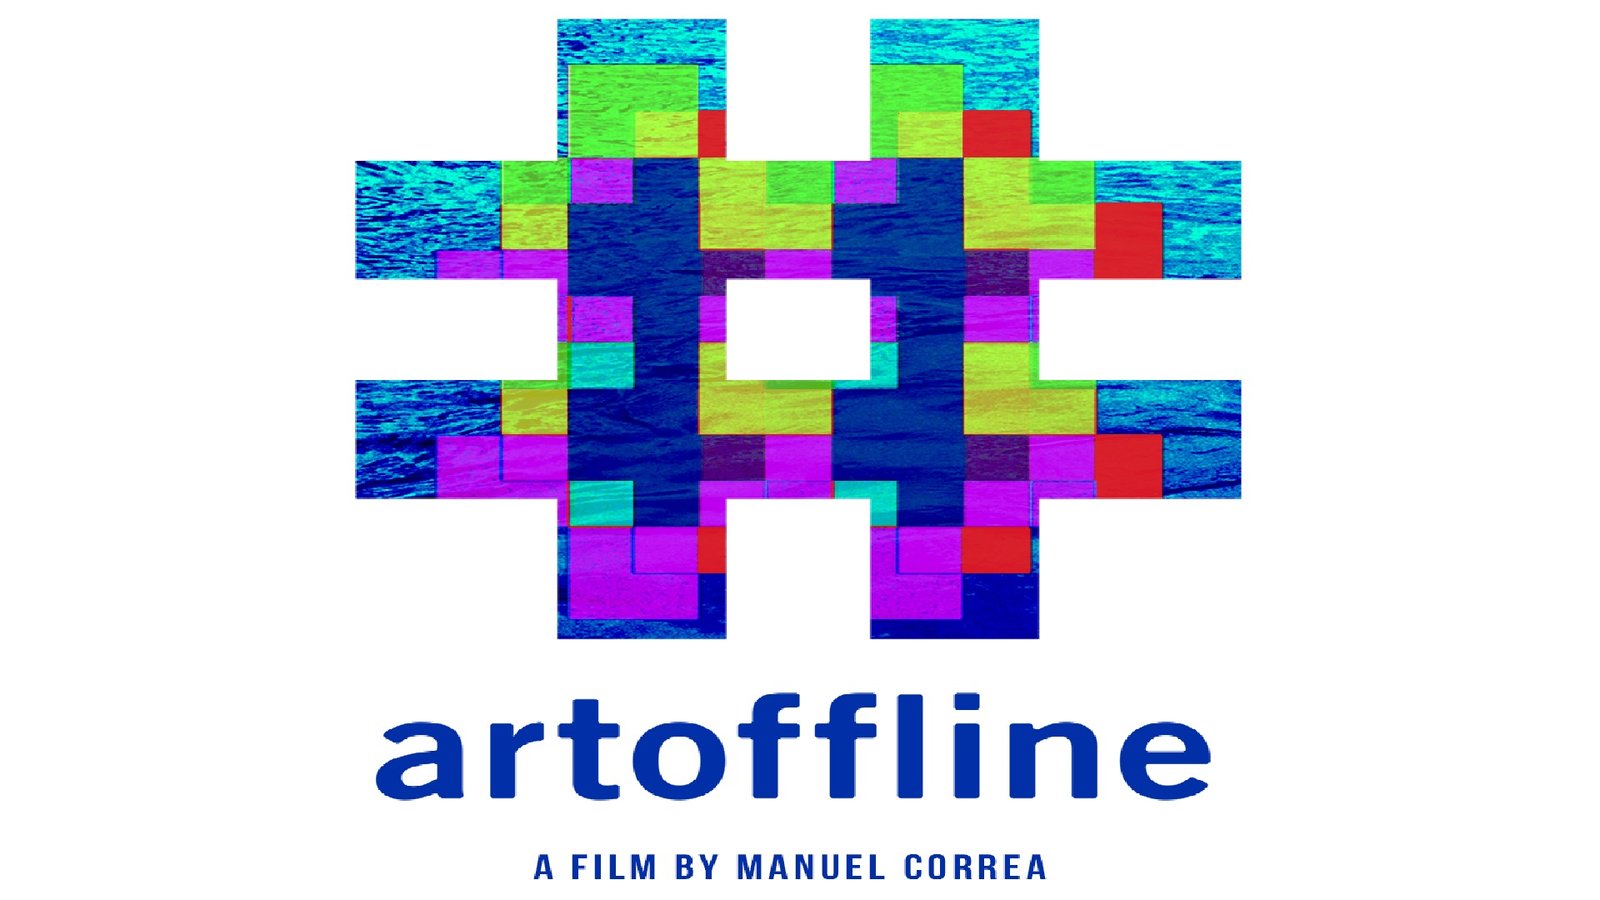 #ArtOffline - Art in the Internet Age